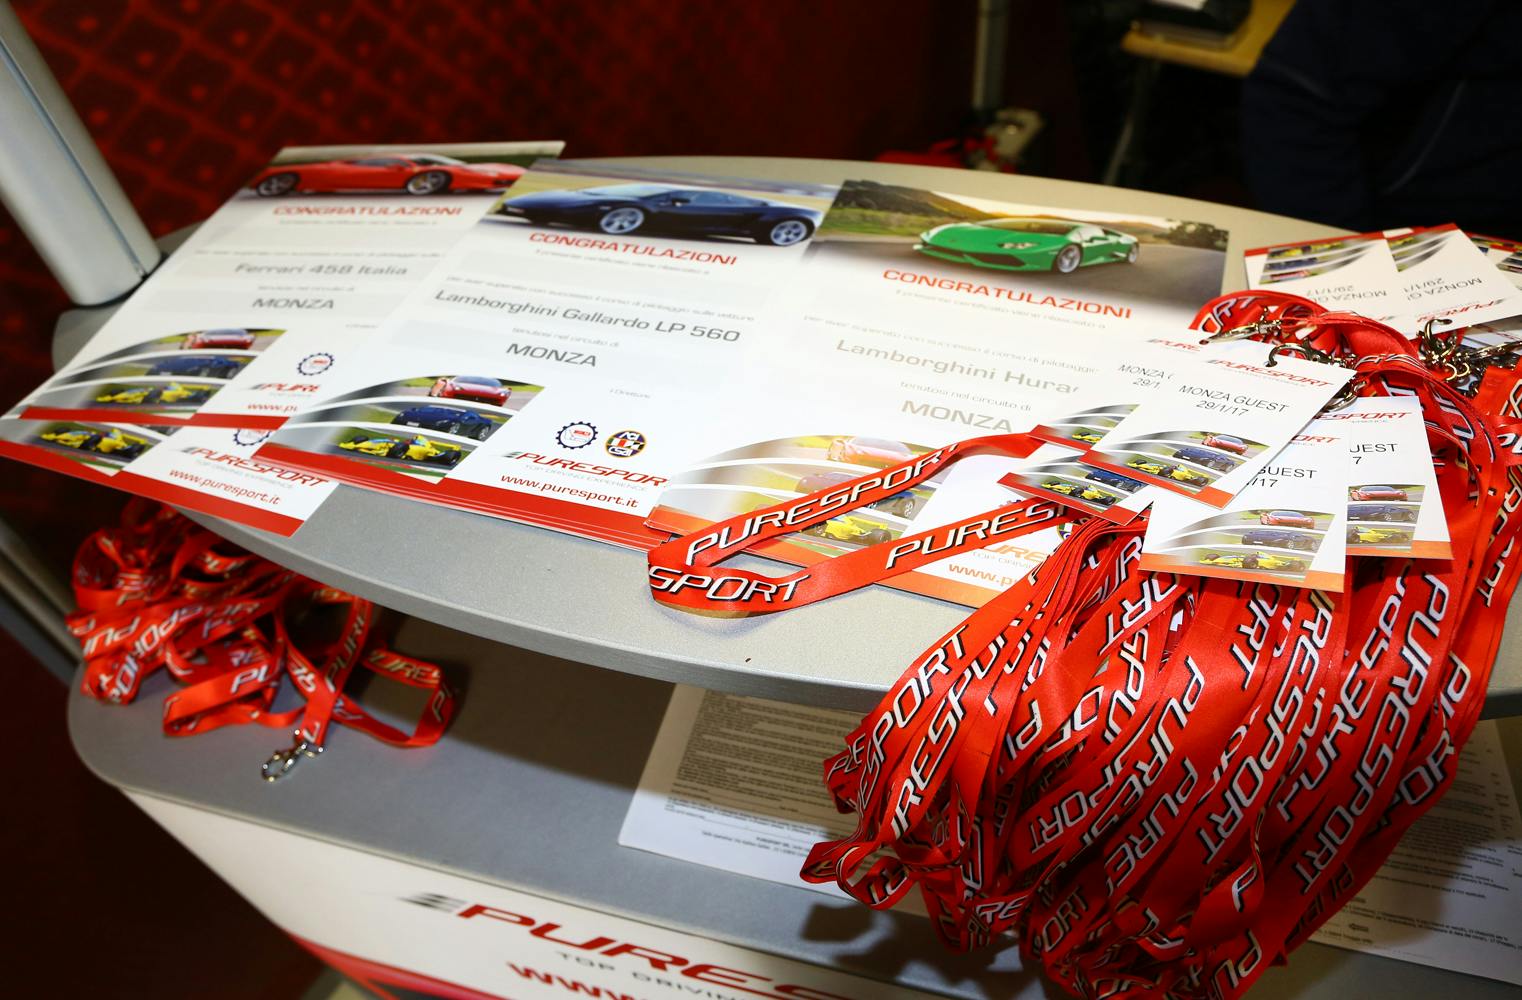 Ferrari 488 fahren | die italienische Legende in Hockenheim